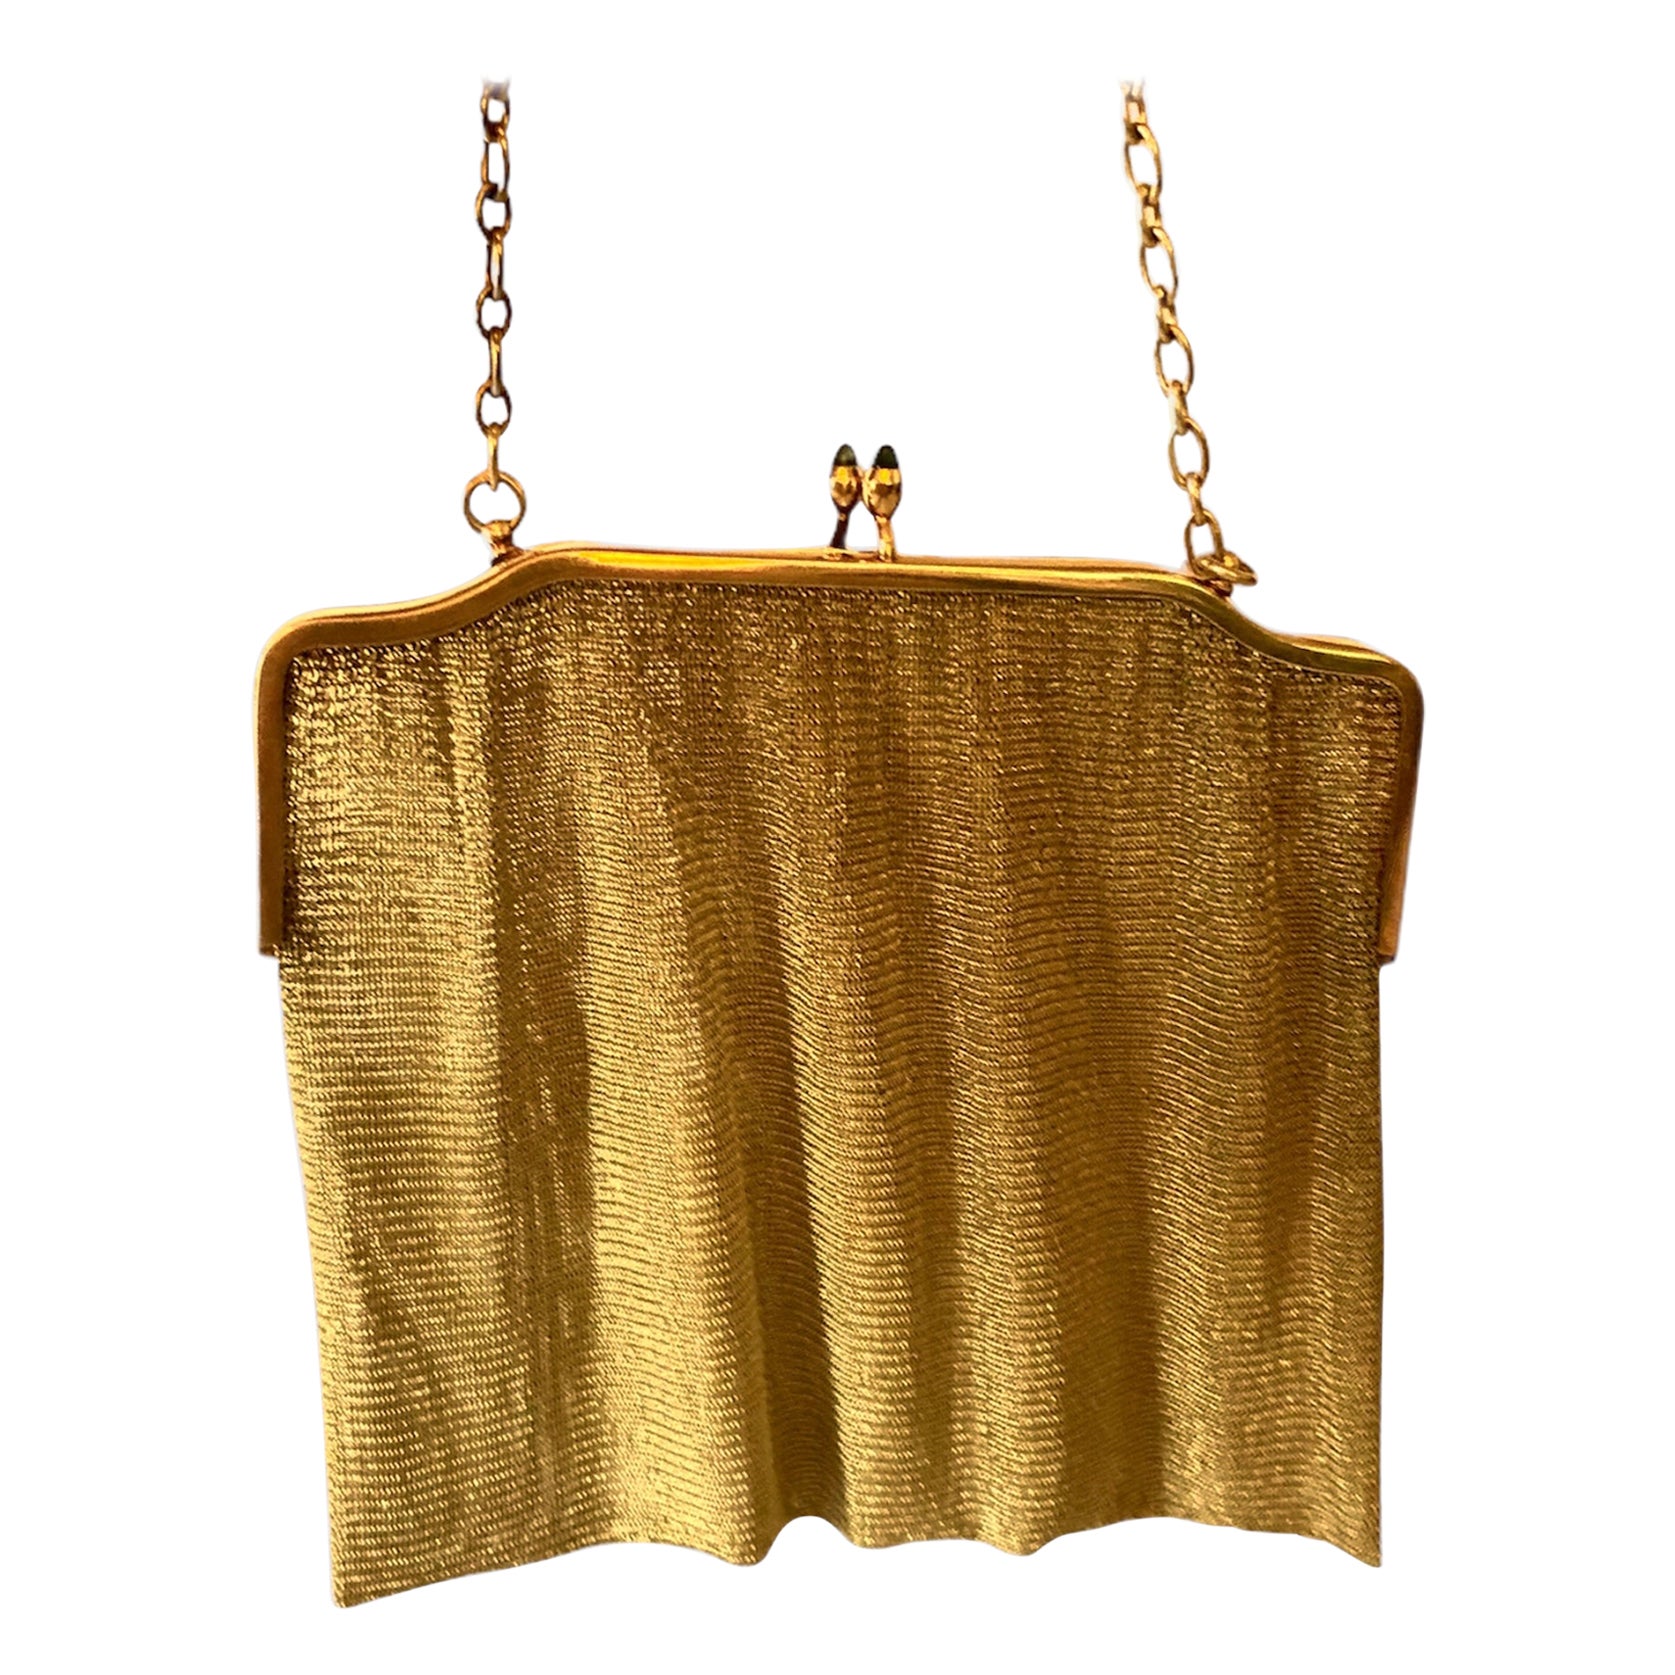 Antique 18 Karat Yellow Gold Vintage Purse Bag